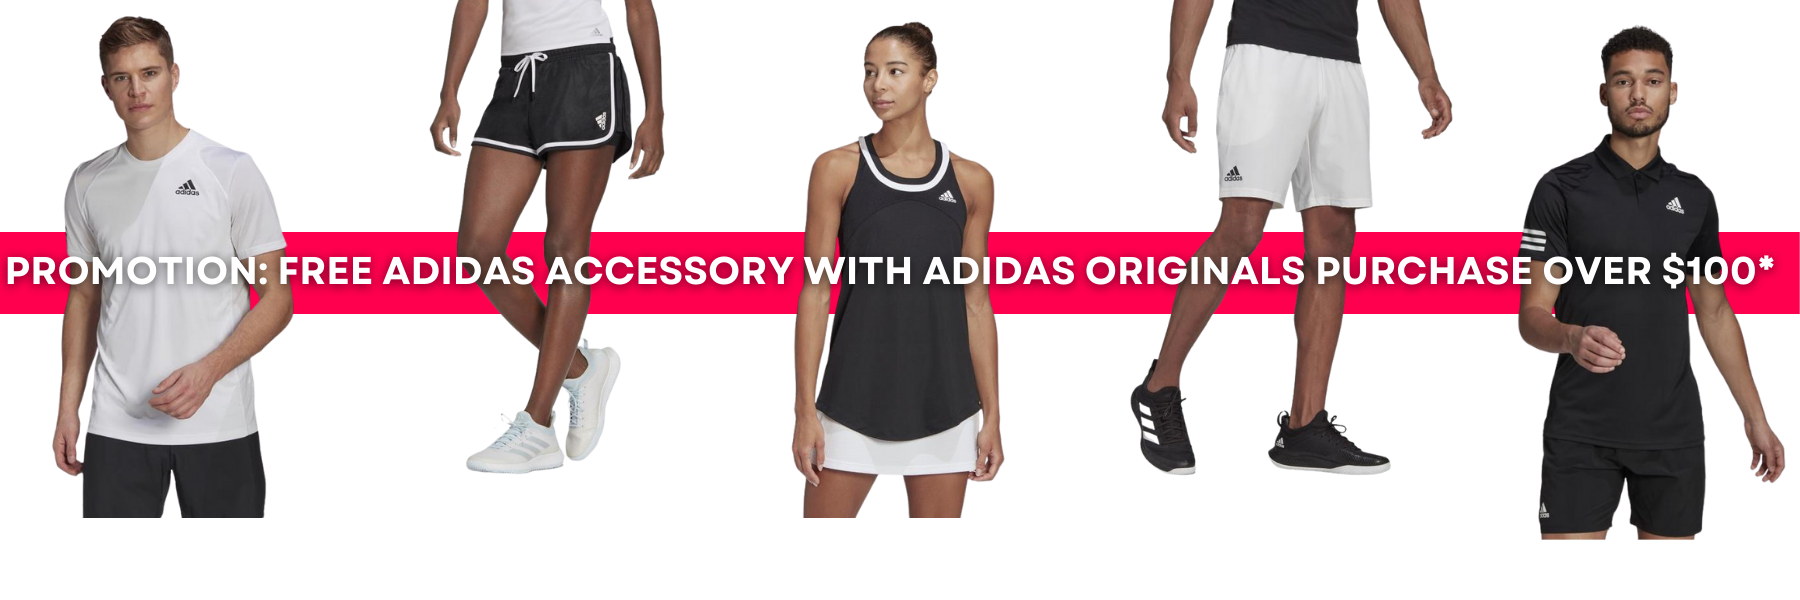 Adidas Originals Promotion